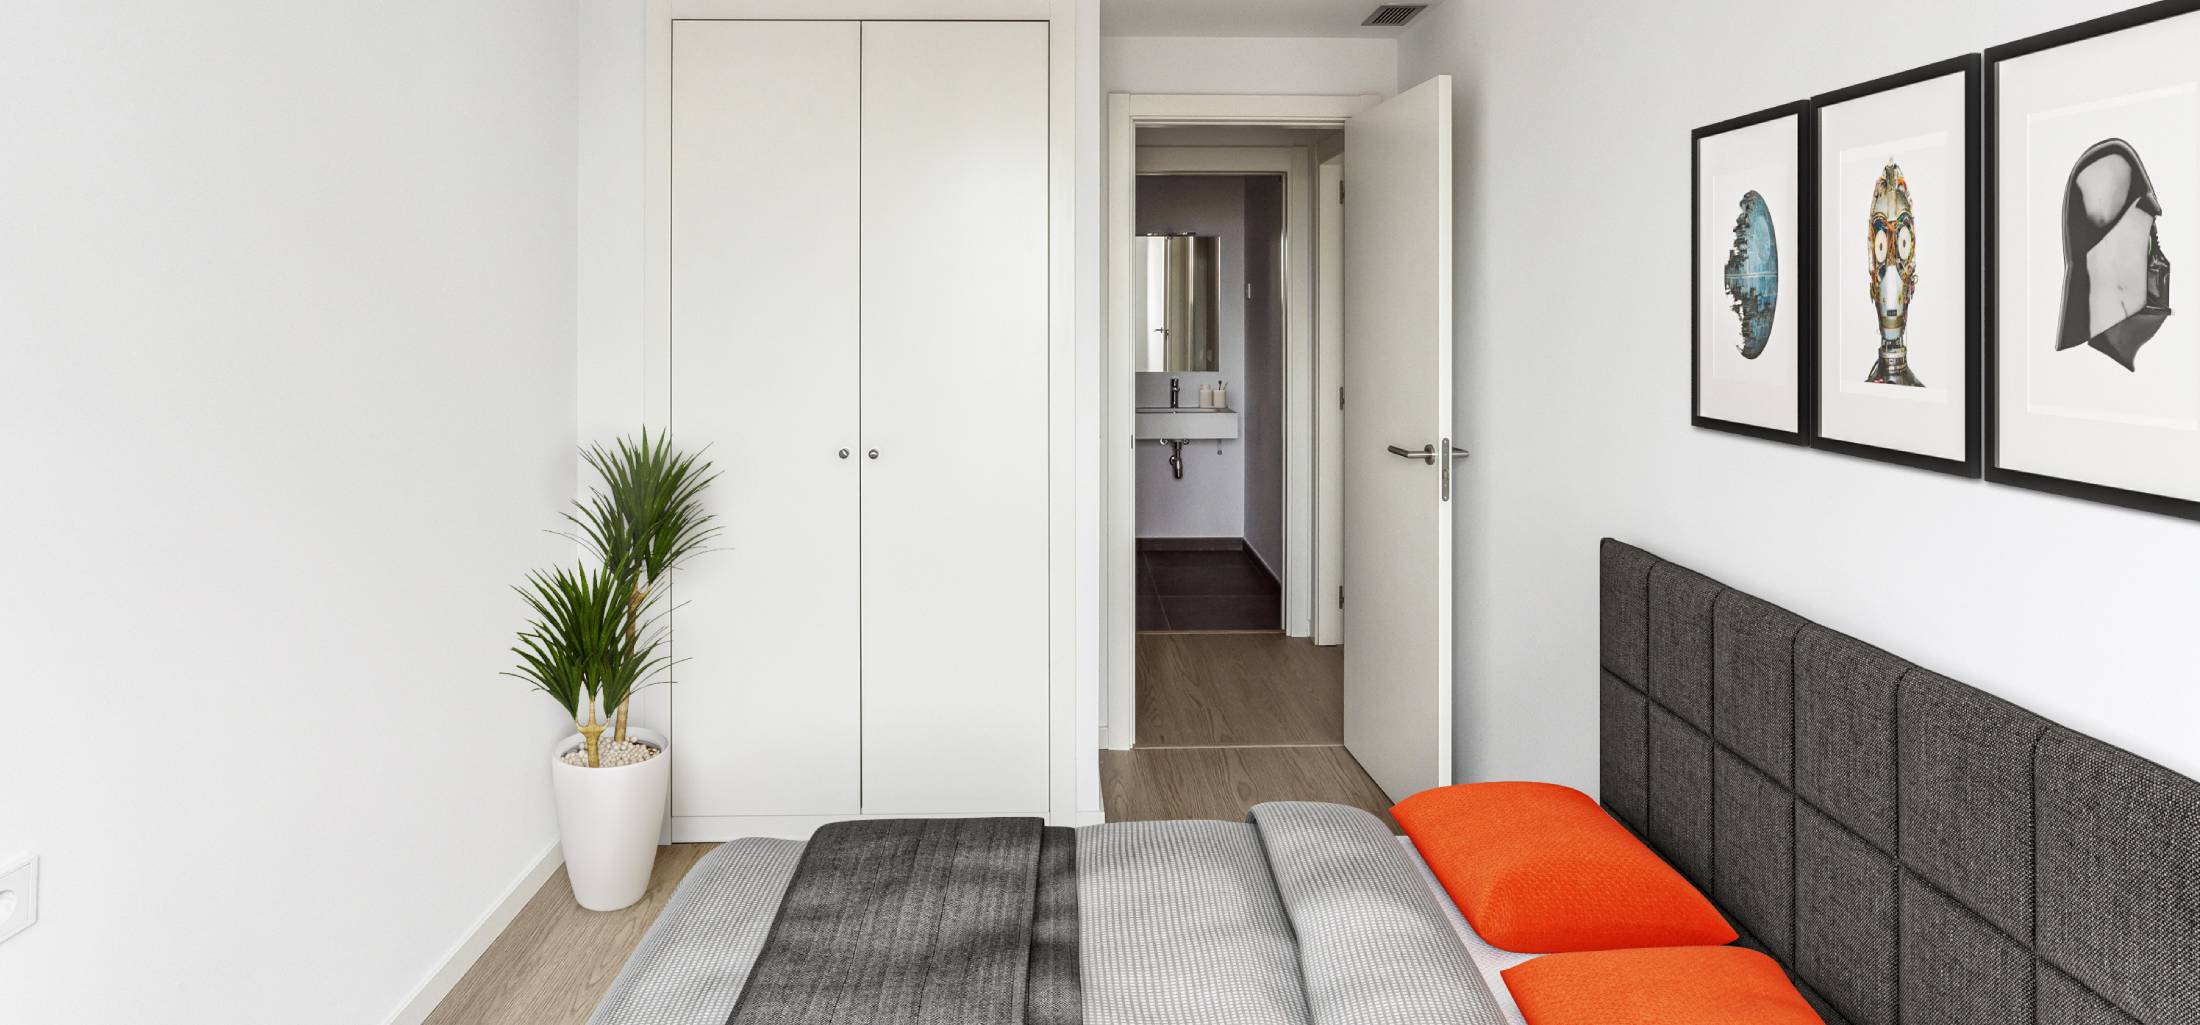 Dormitori individual | Marobert | Badalona 